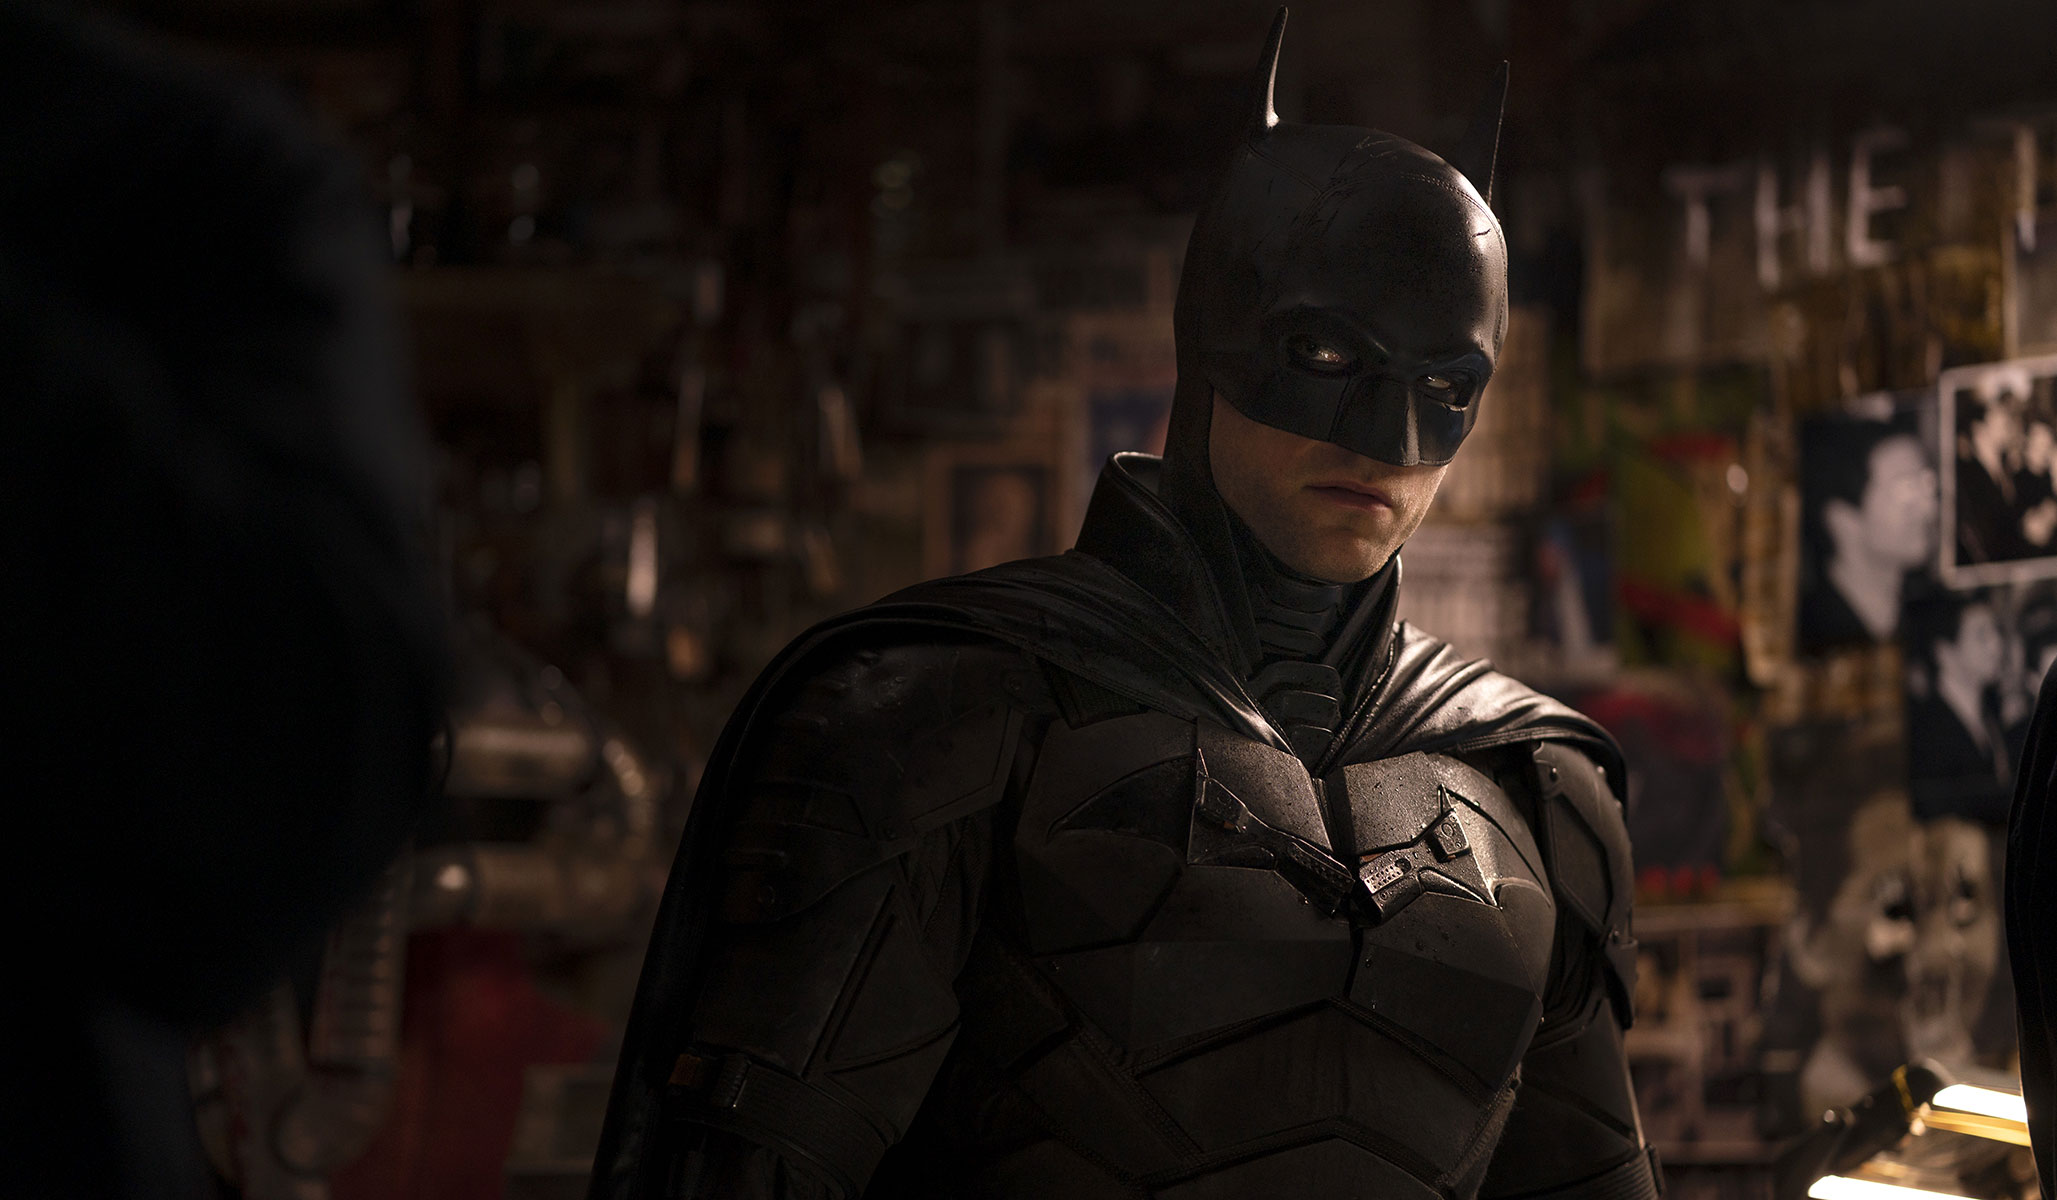 The Batman': Dark, but Enjoyable | National Review